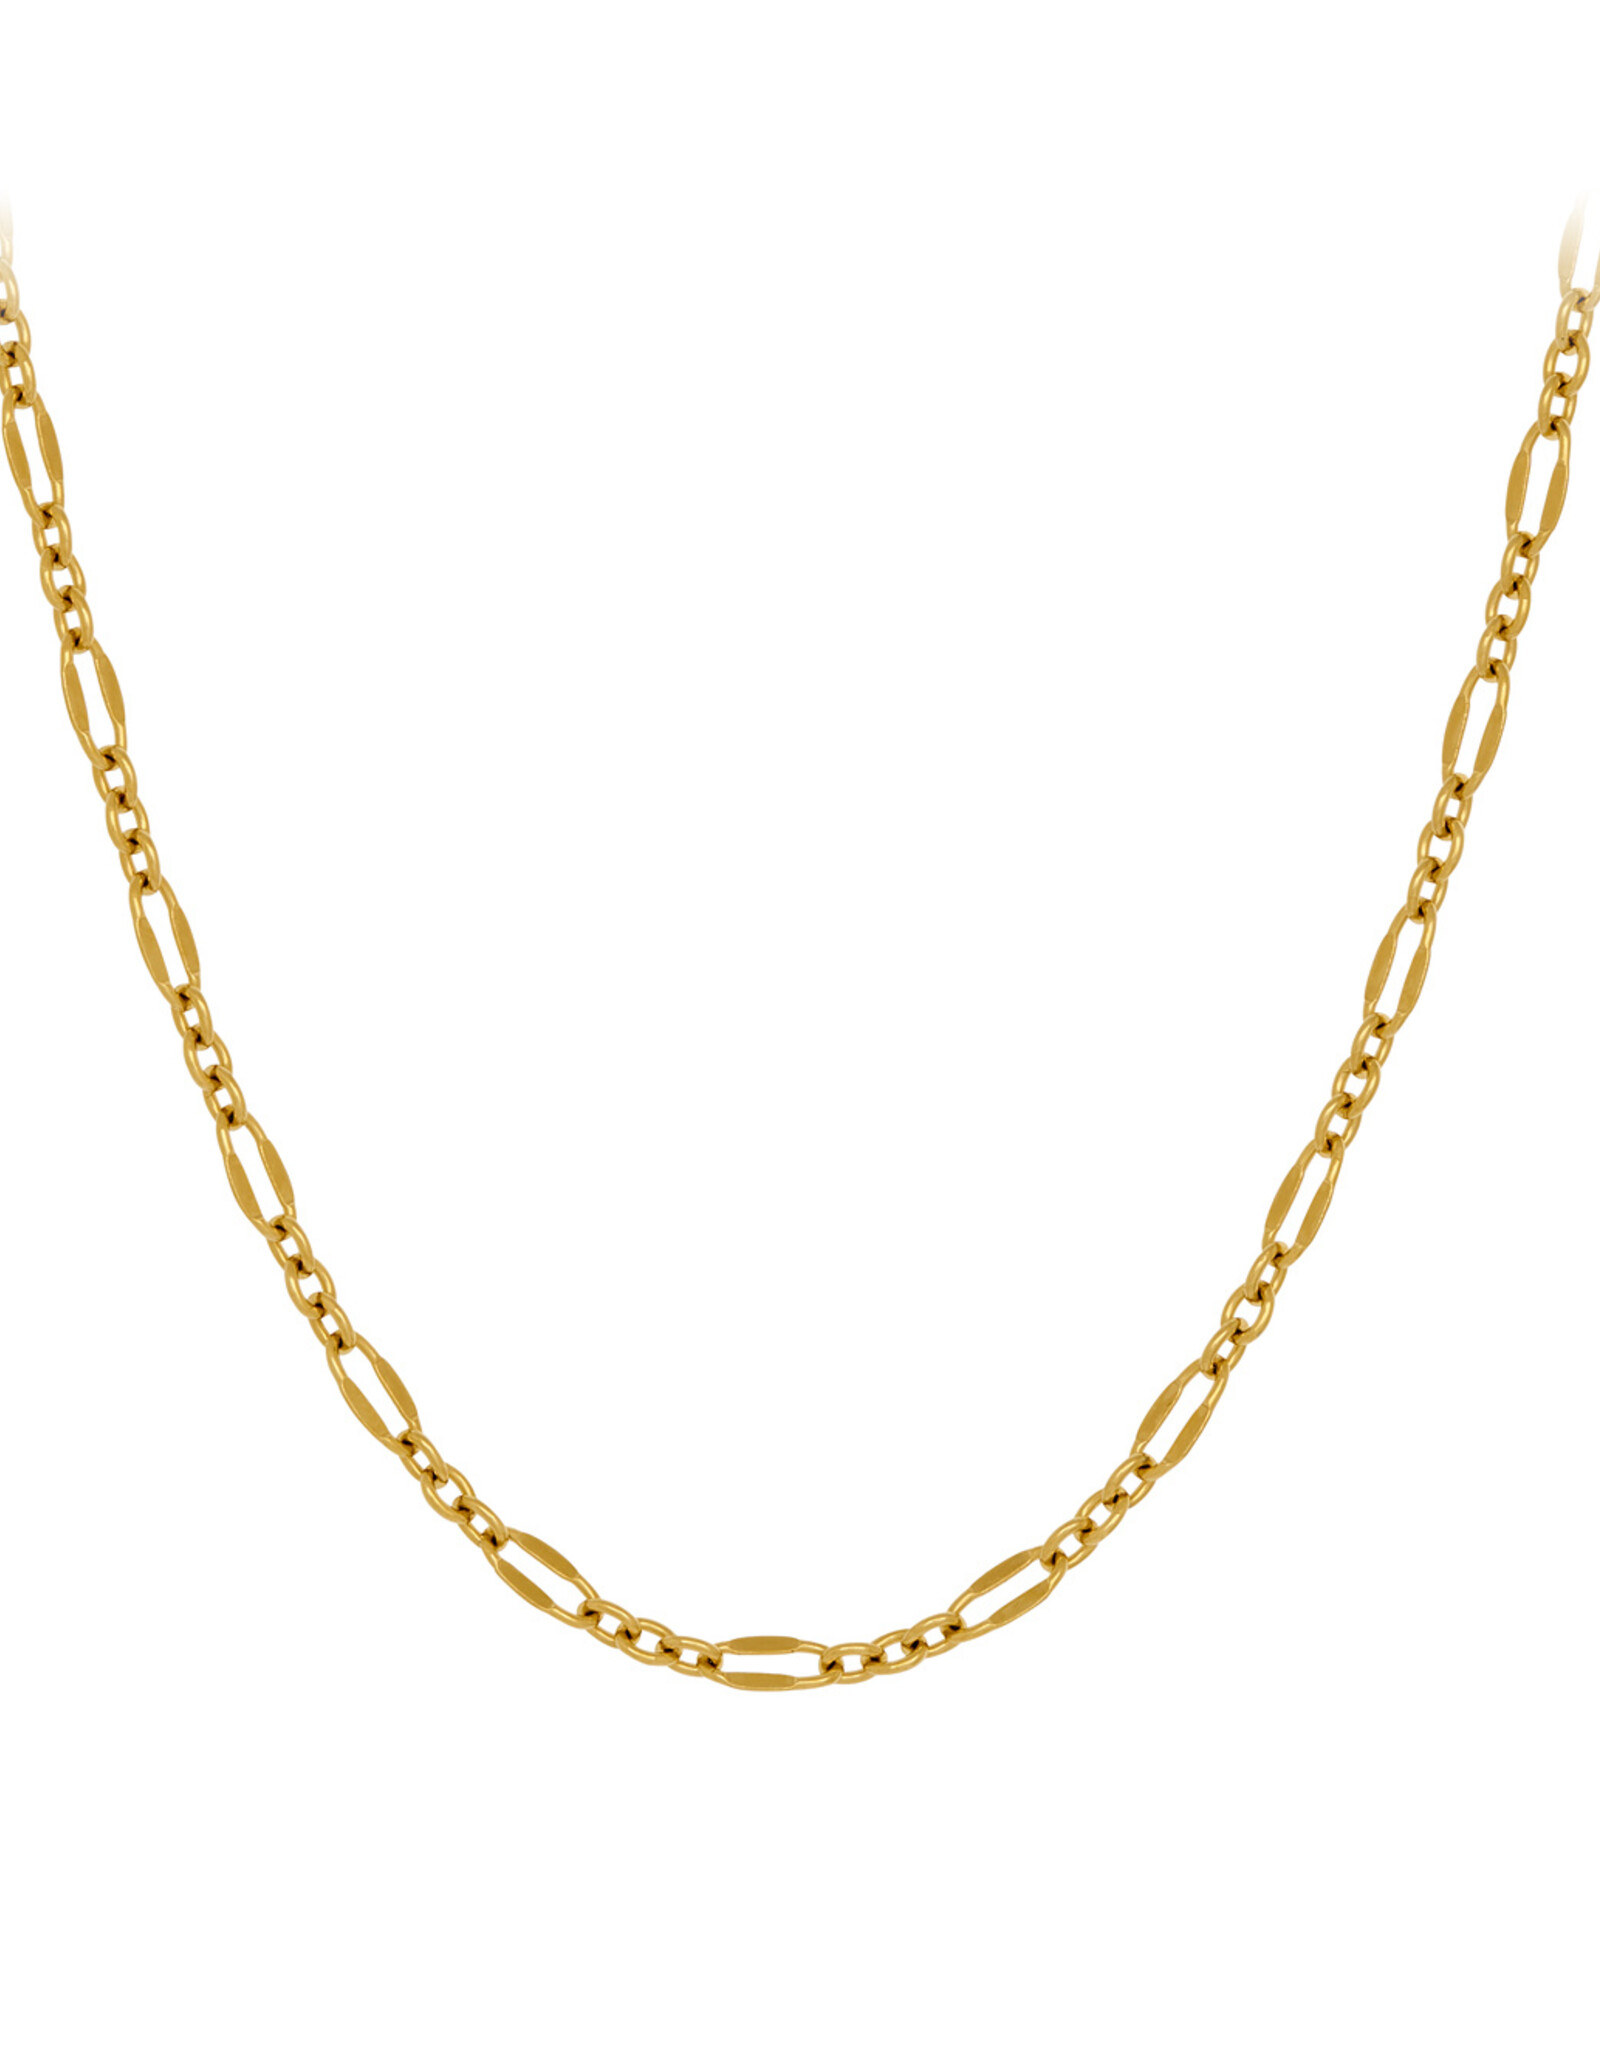 Pernille Corydon Eden necklace 65cm